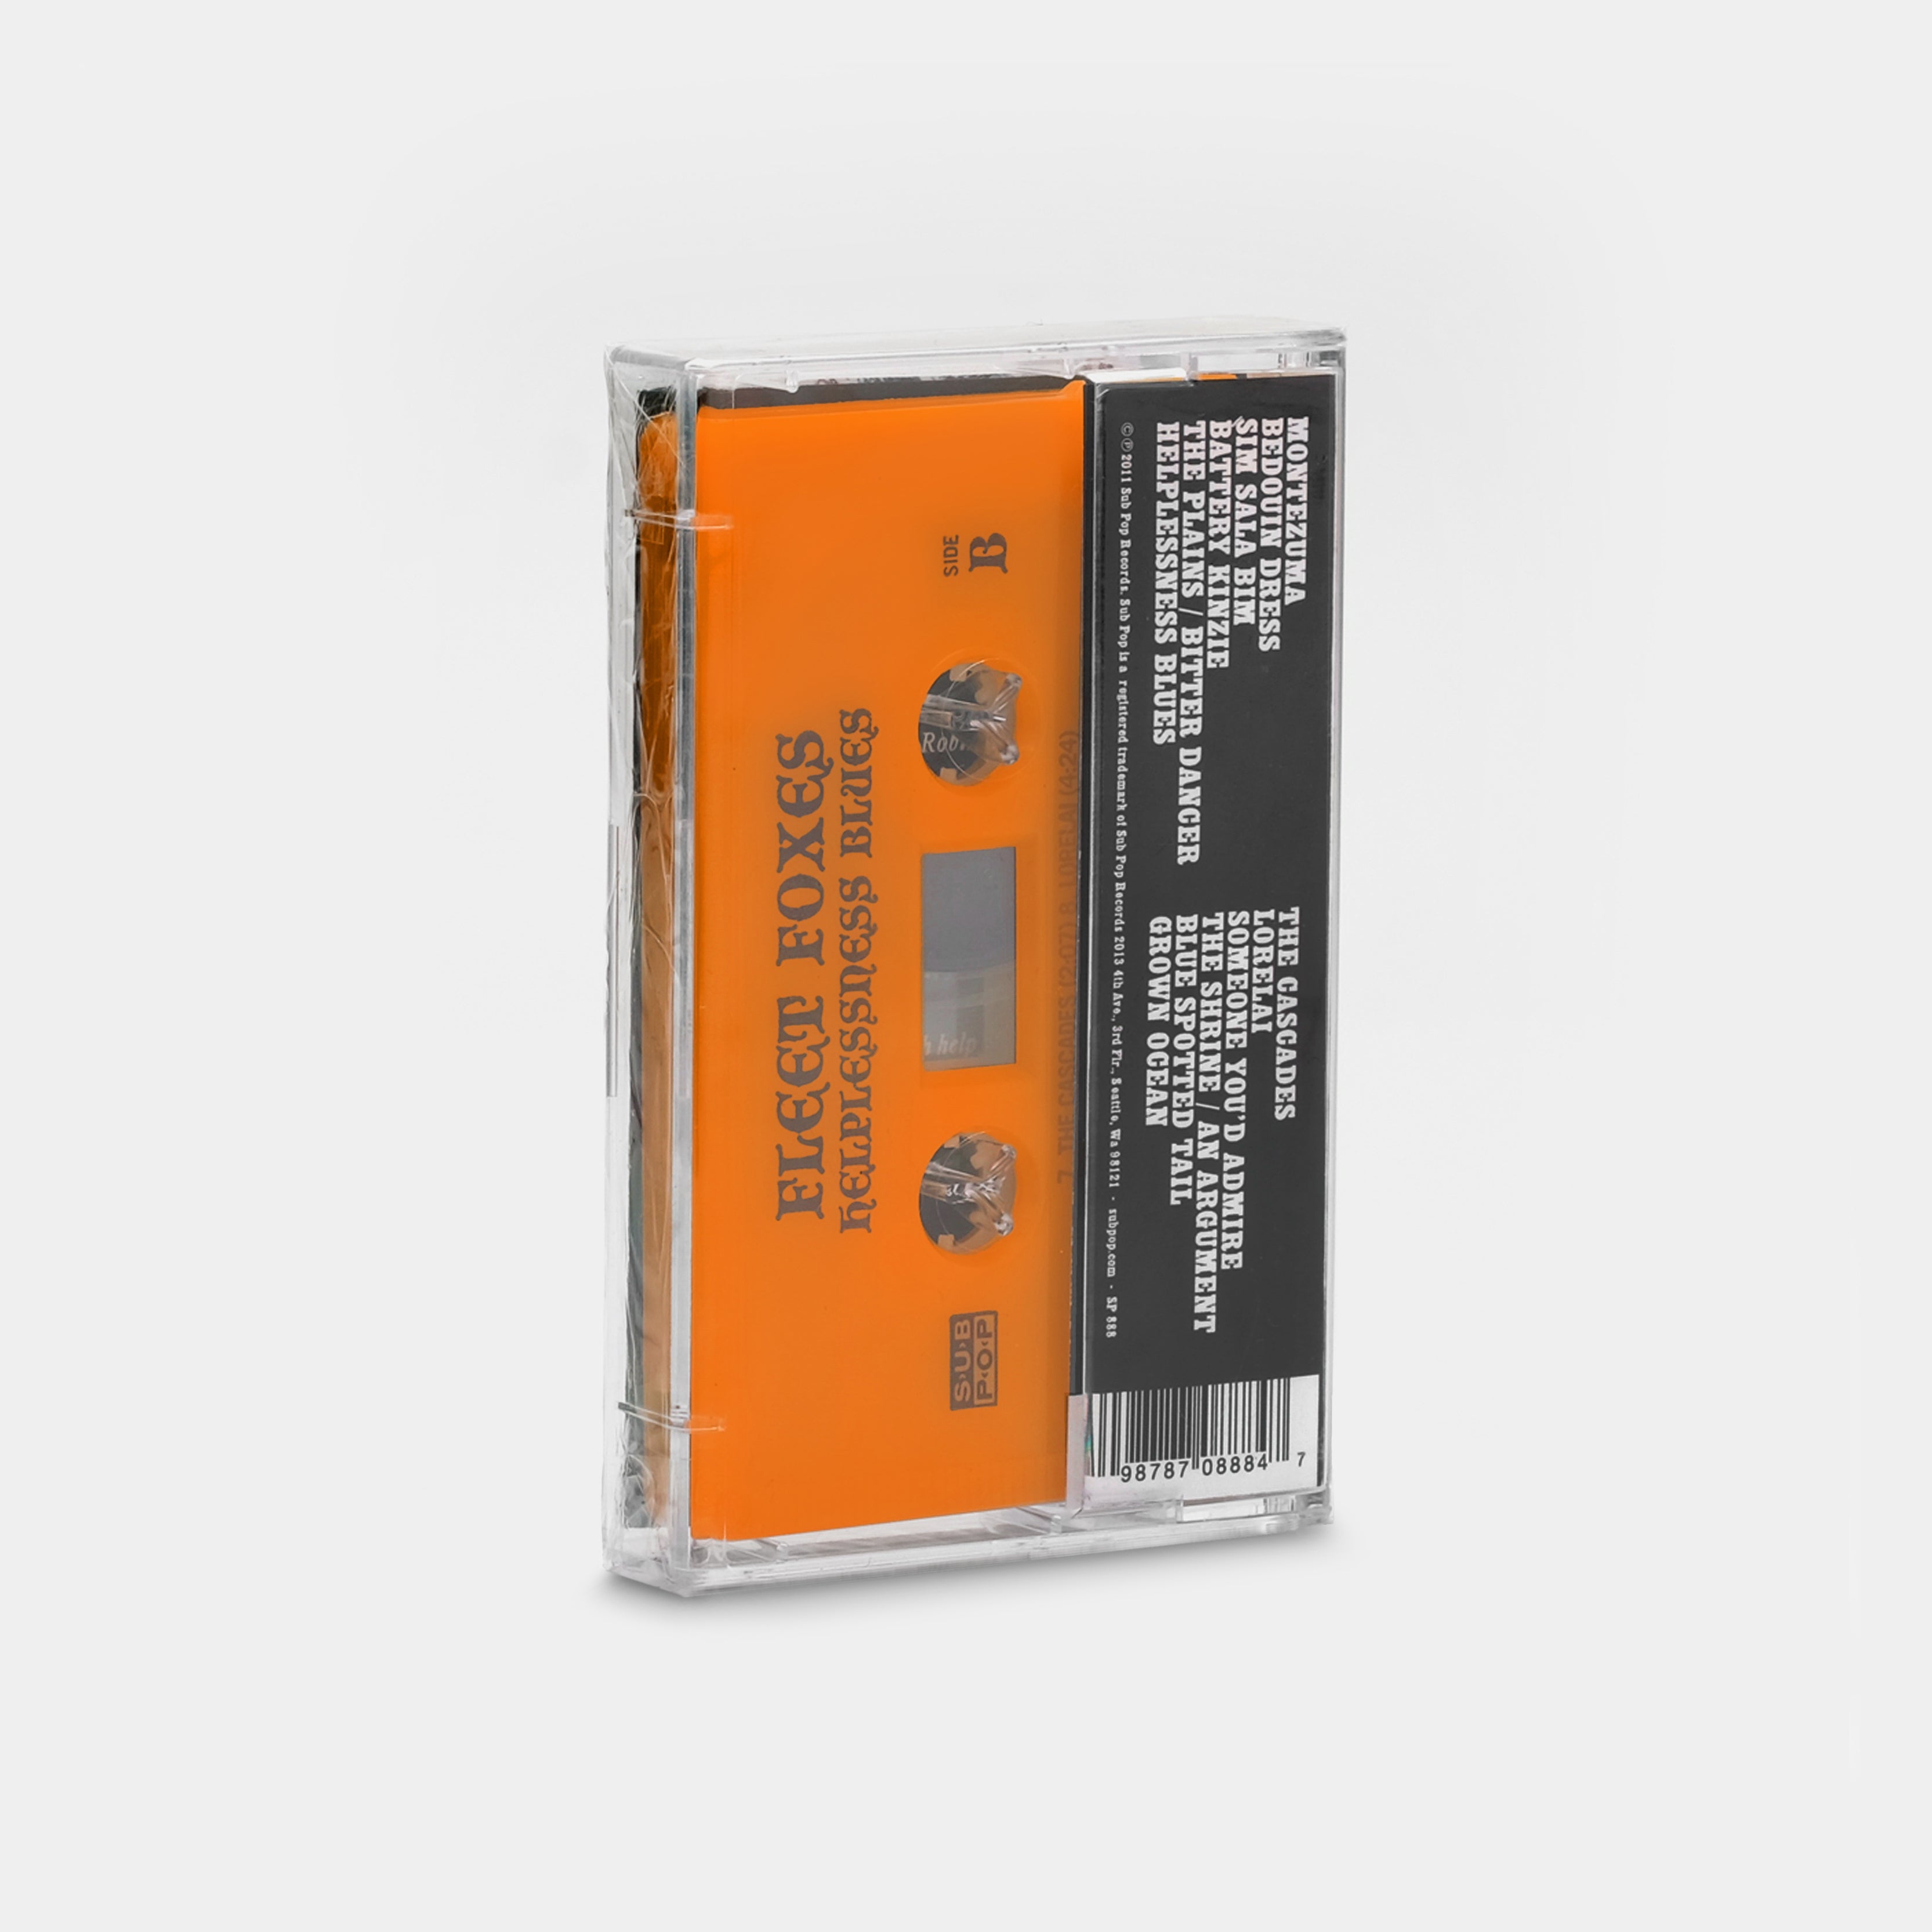 Fleet Foxes - Helplessness Blues Cassette Tape